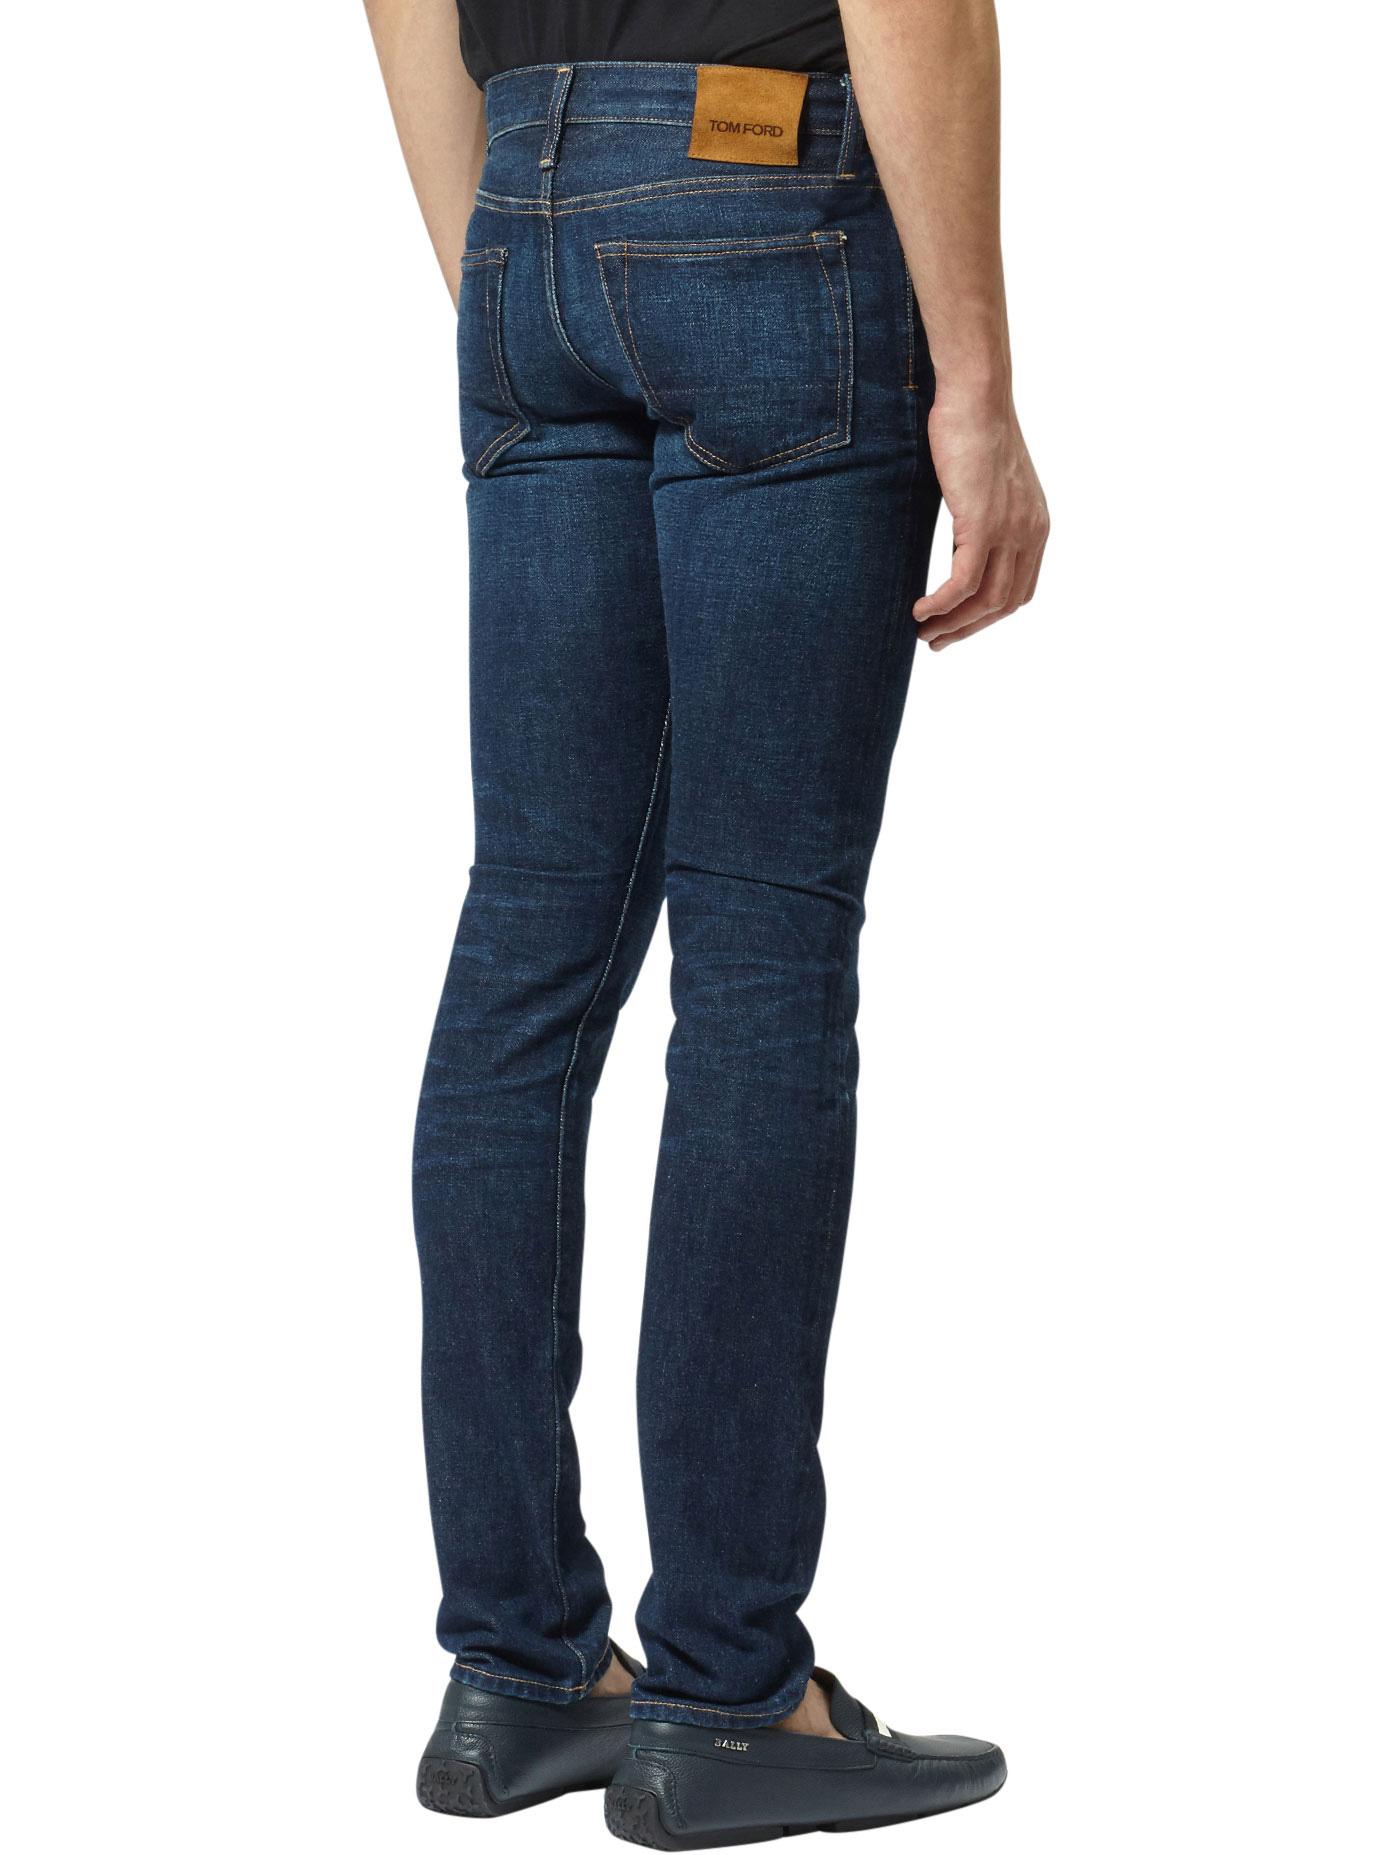 Lyst - Tom Ford Slim Fit Denim Jeans in Blue for Men